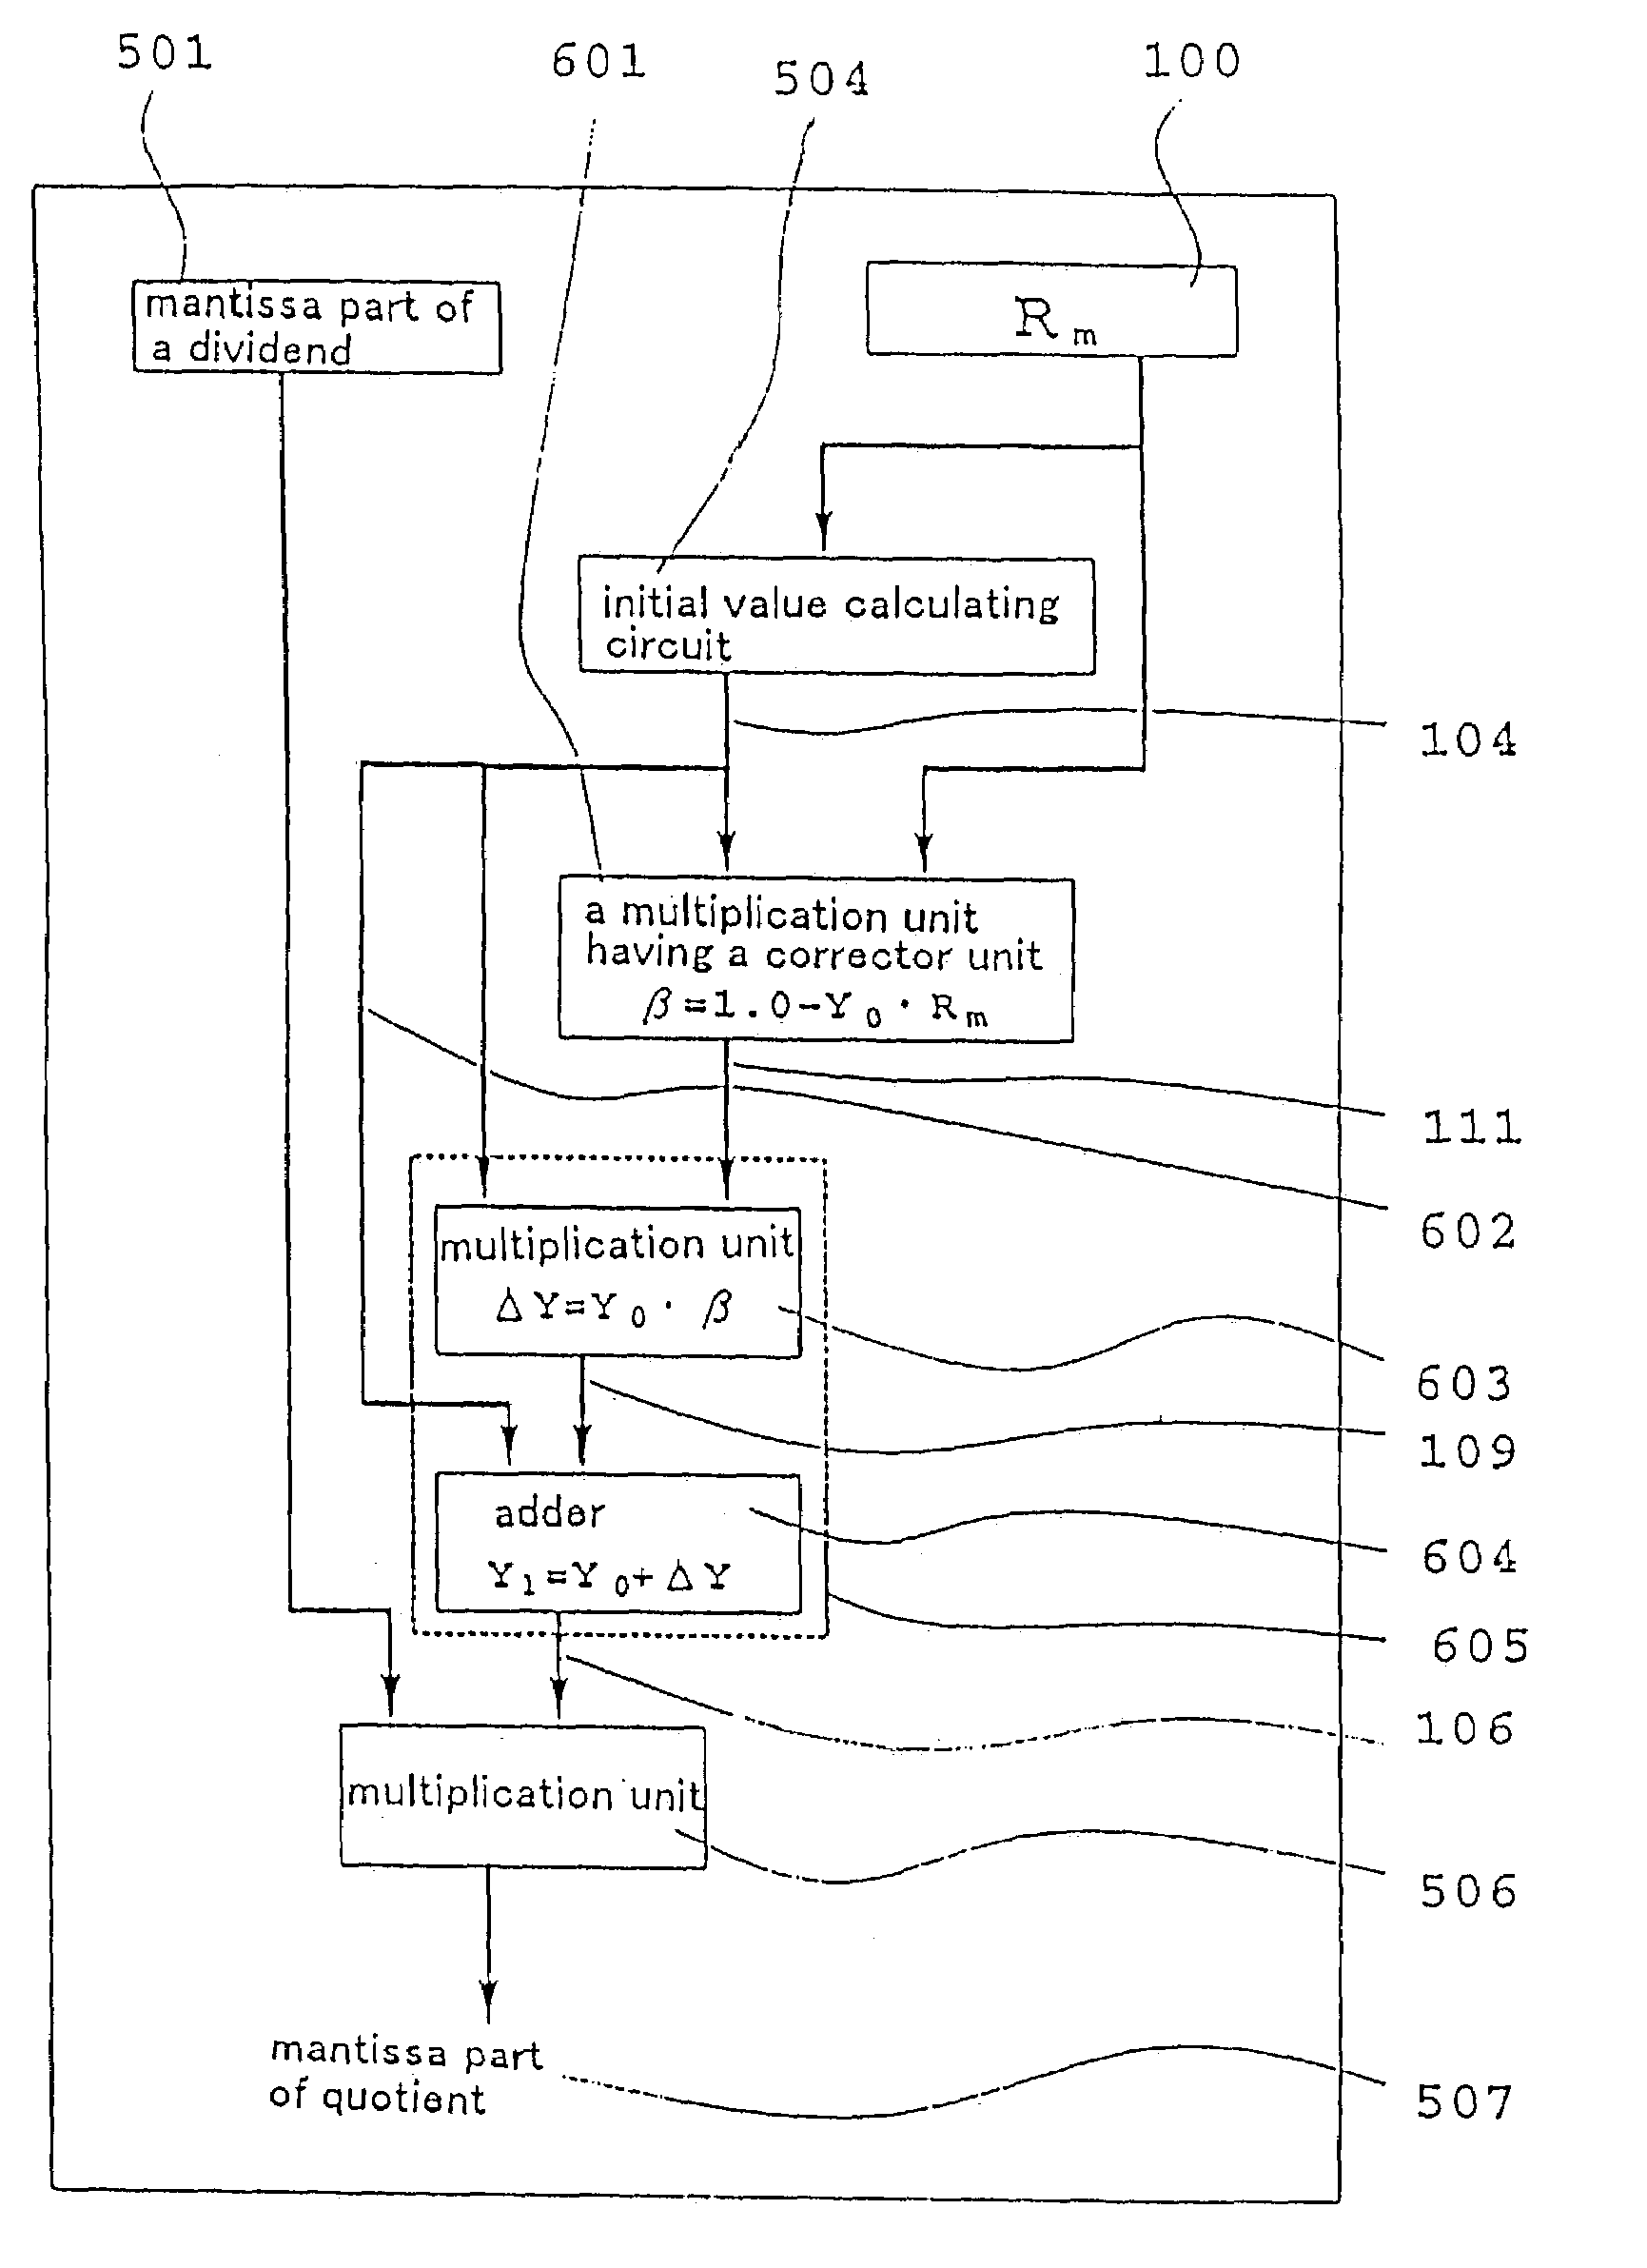 Computing system using newton-raphson method